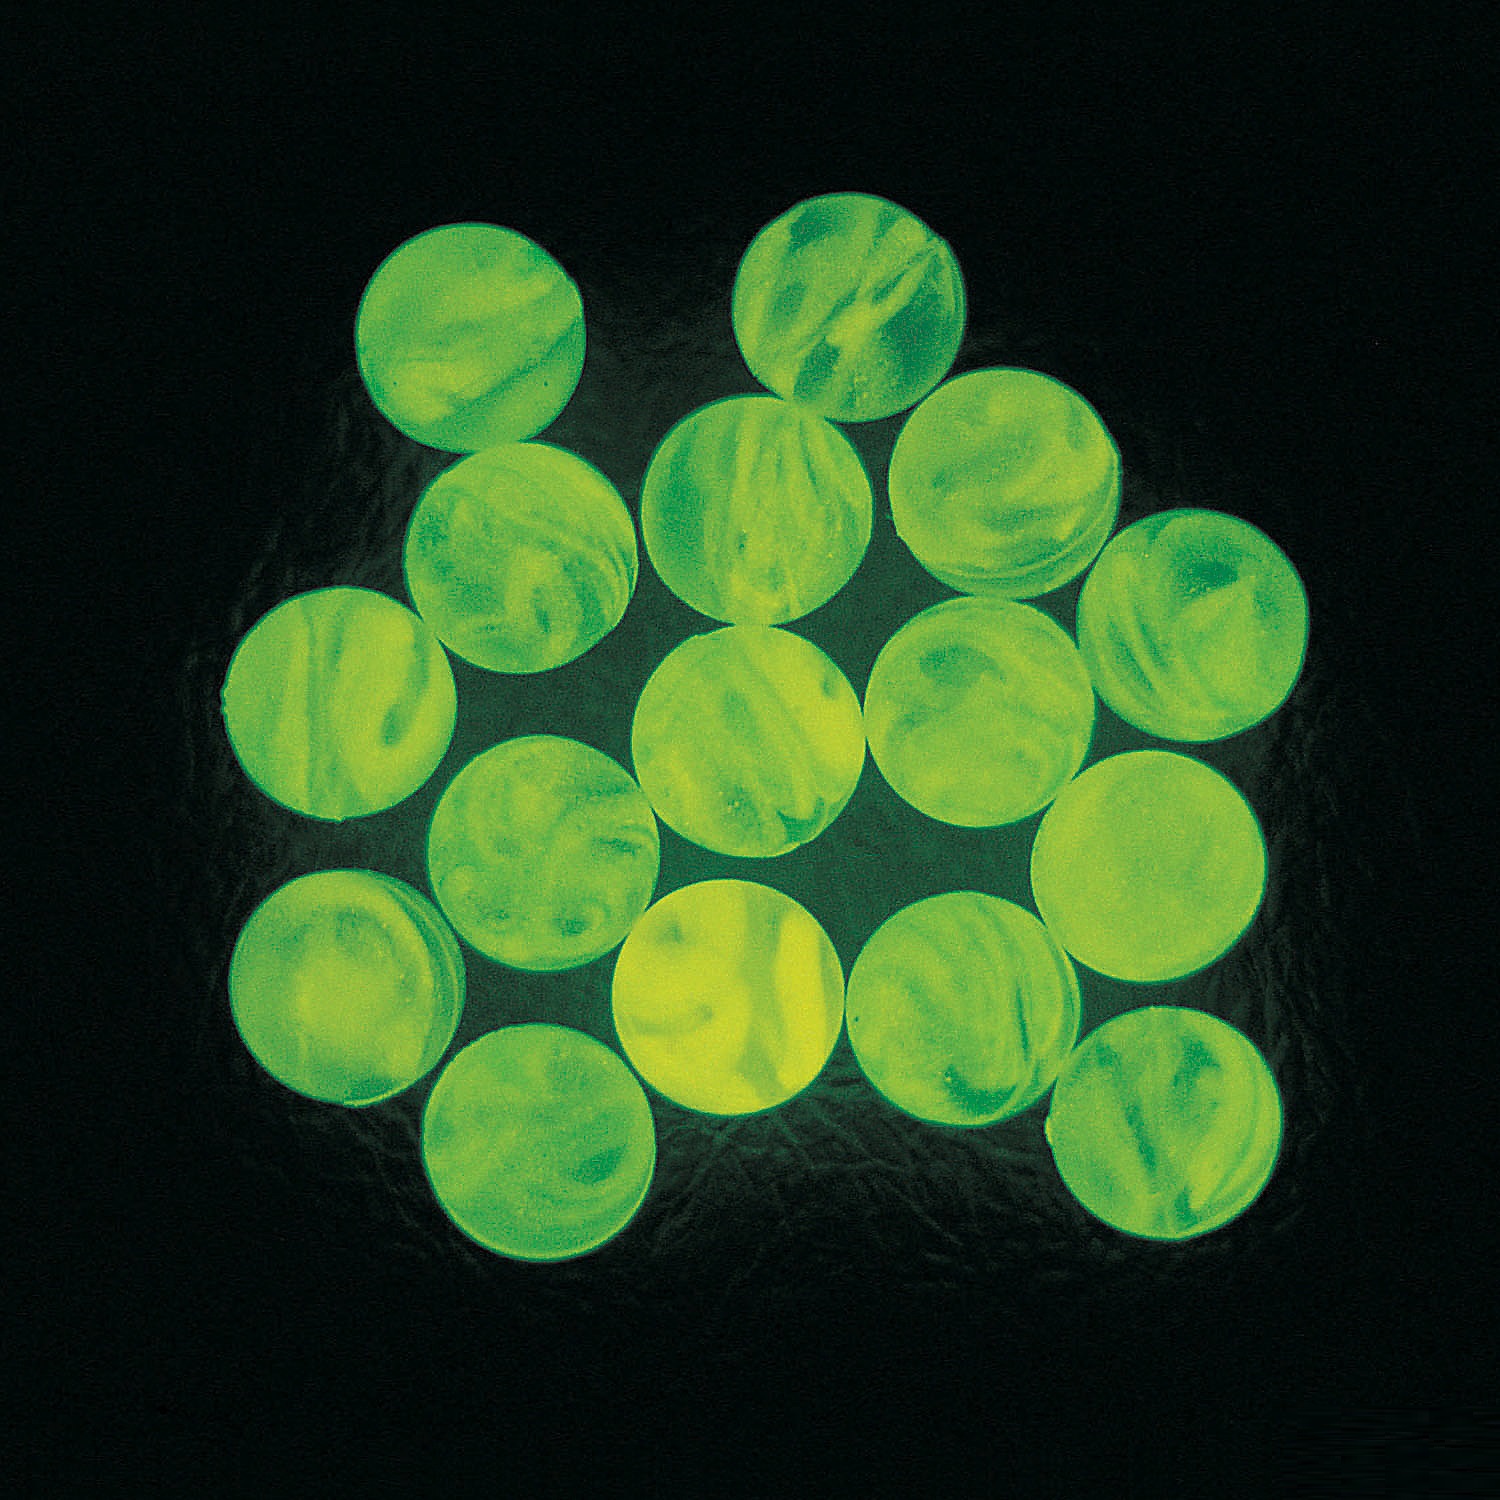 marbleized-glow-in-the-dark-green-bouncy-balls-48-pc-_12_510-a01